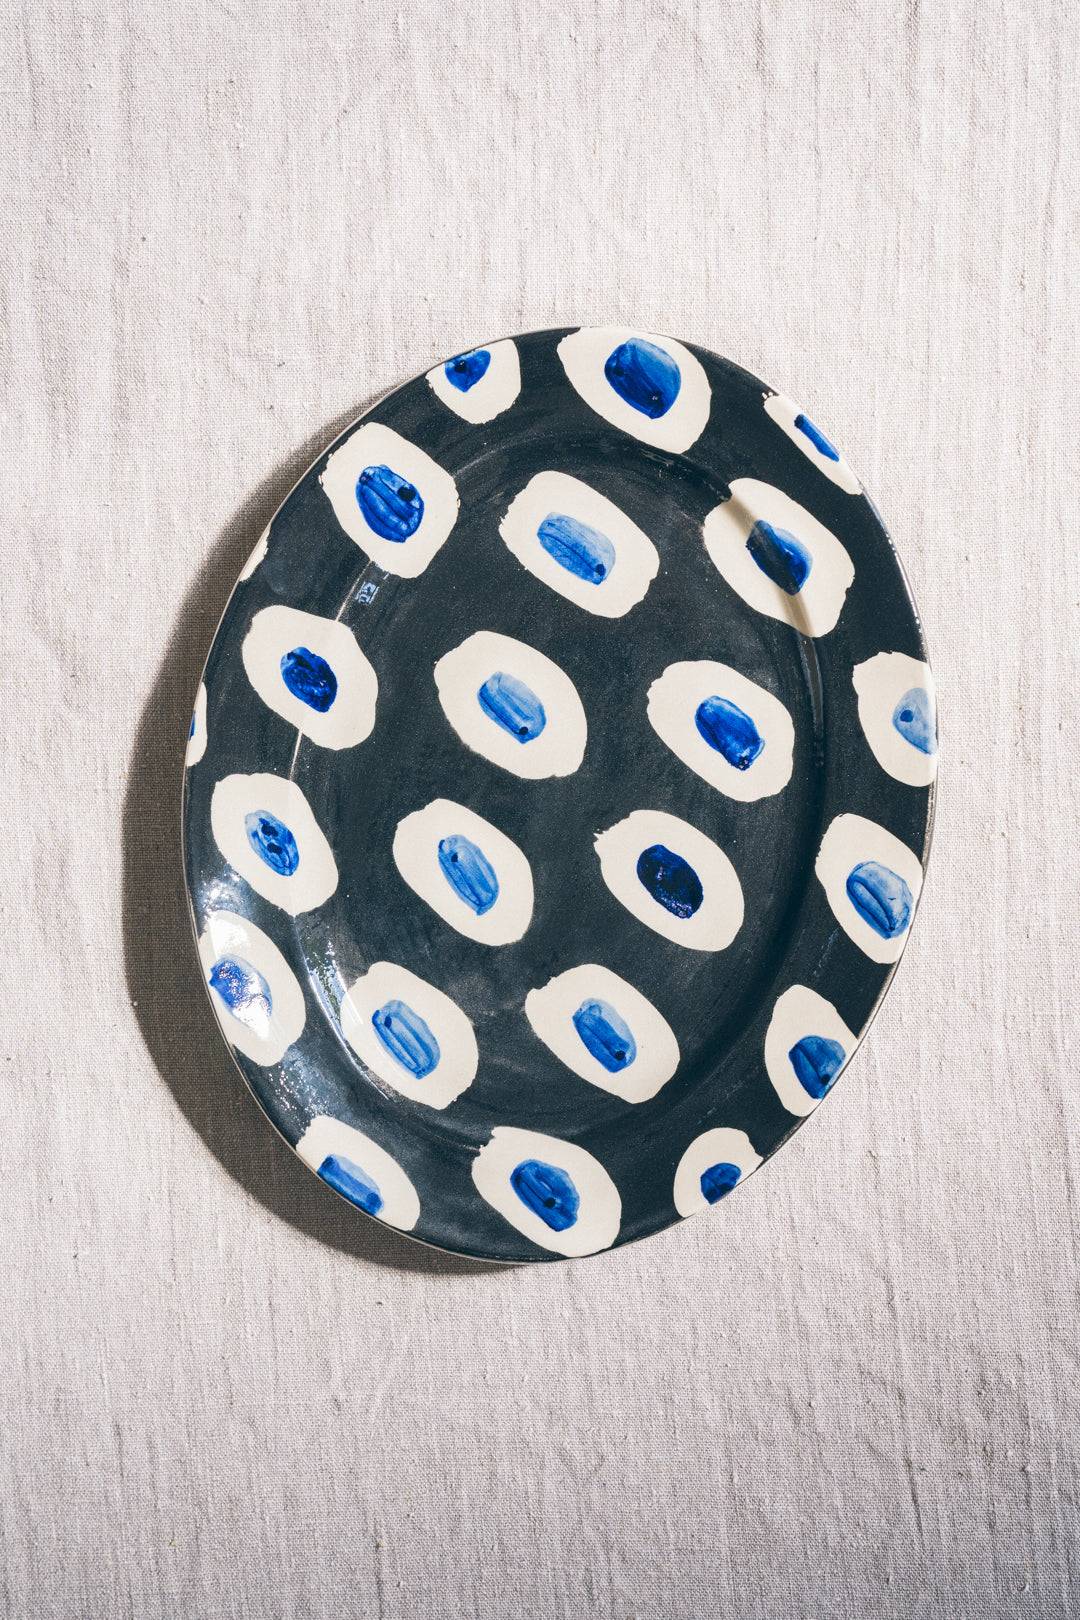 Ali Hewson Oval Cobalt Dash Platter